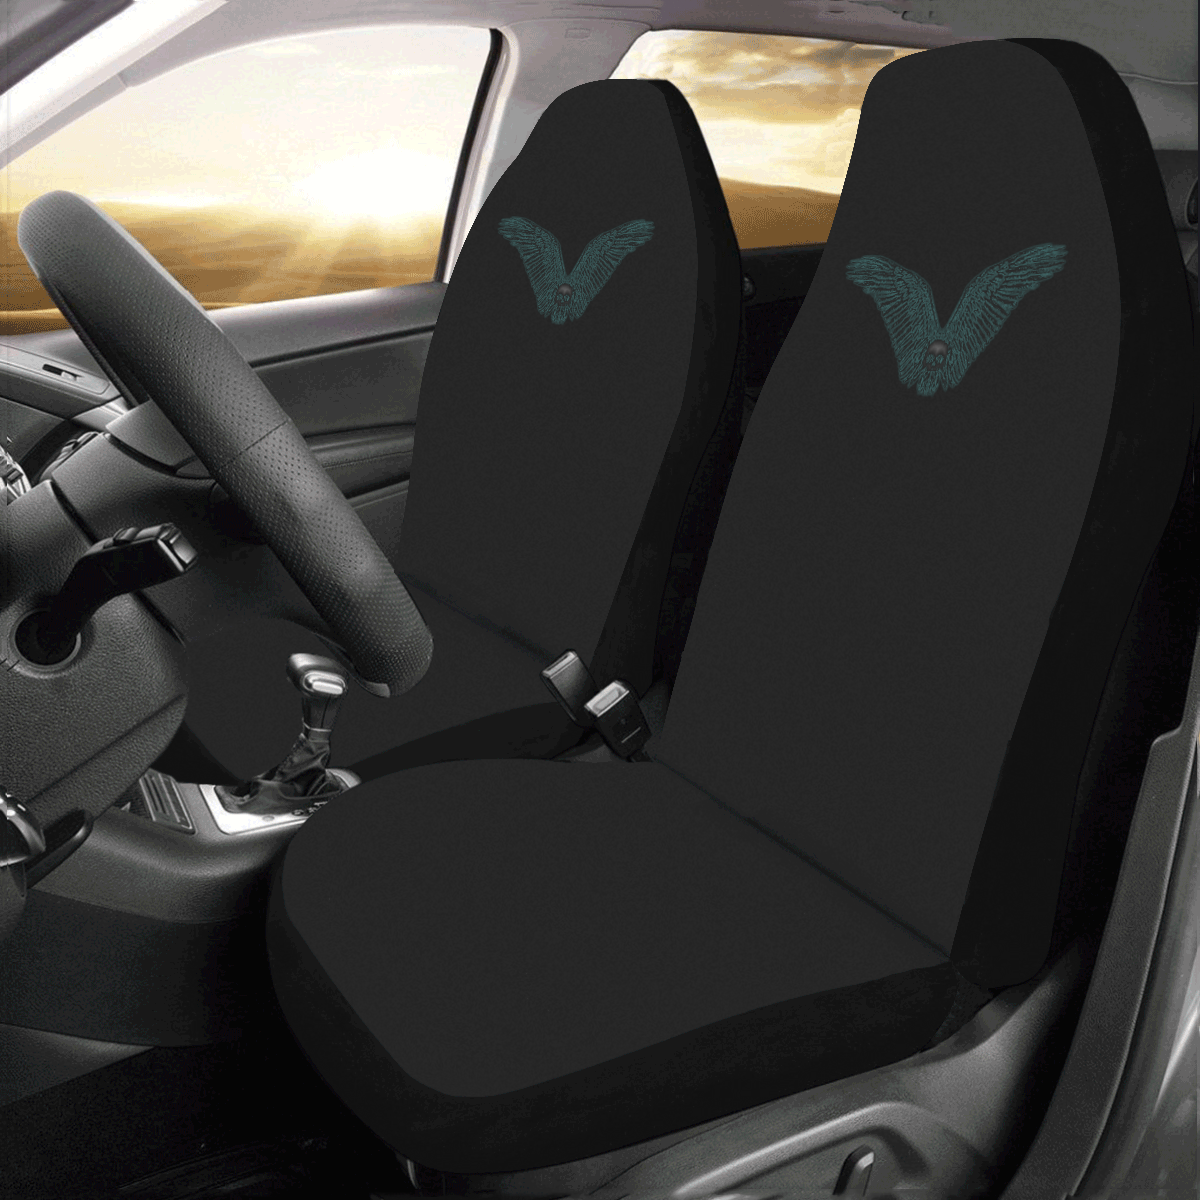 wings skull Car Seat Covers (Set of 2)